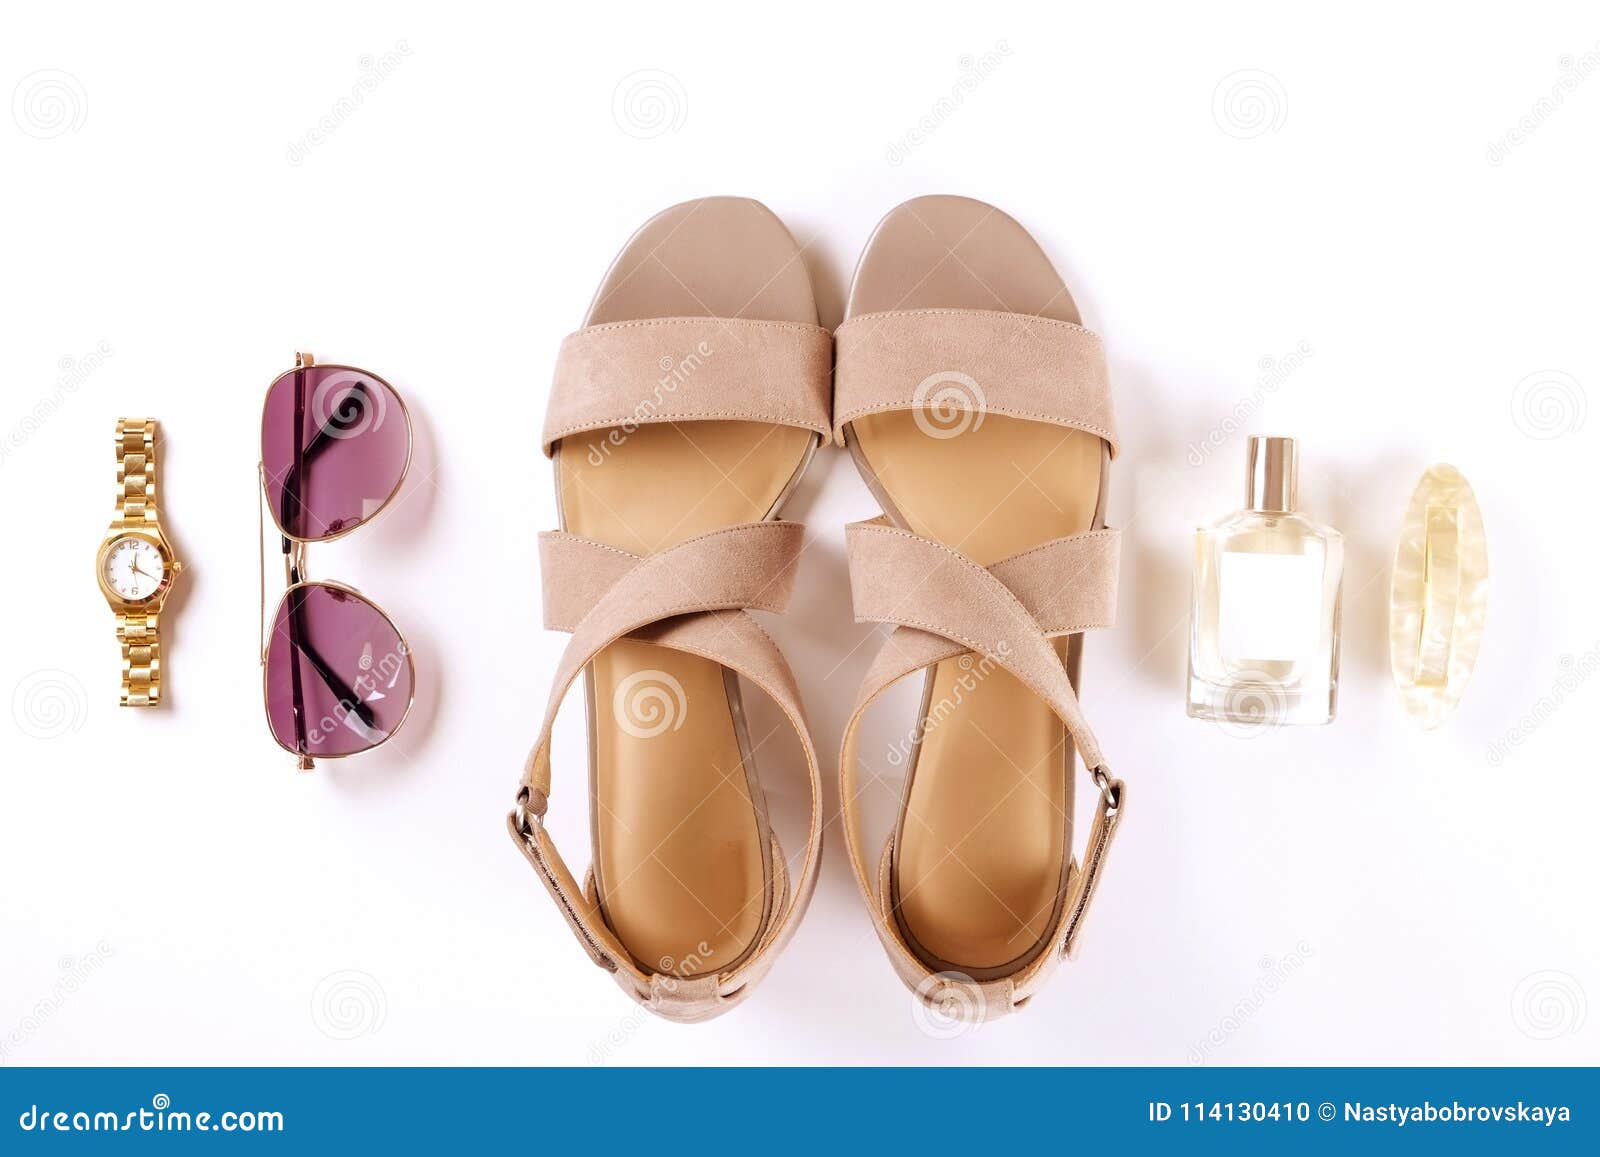 Handdrawn Set Of Women Shoes Block Heels Ankle Booties On Medium Heel  Ballerina Flats Pumps Stiletto